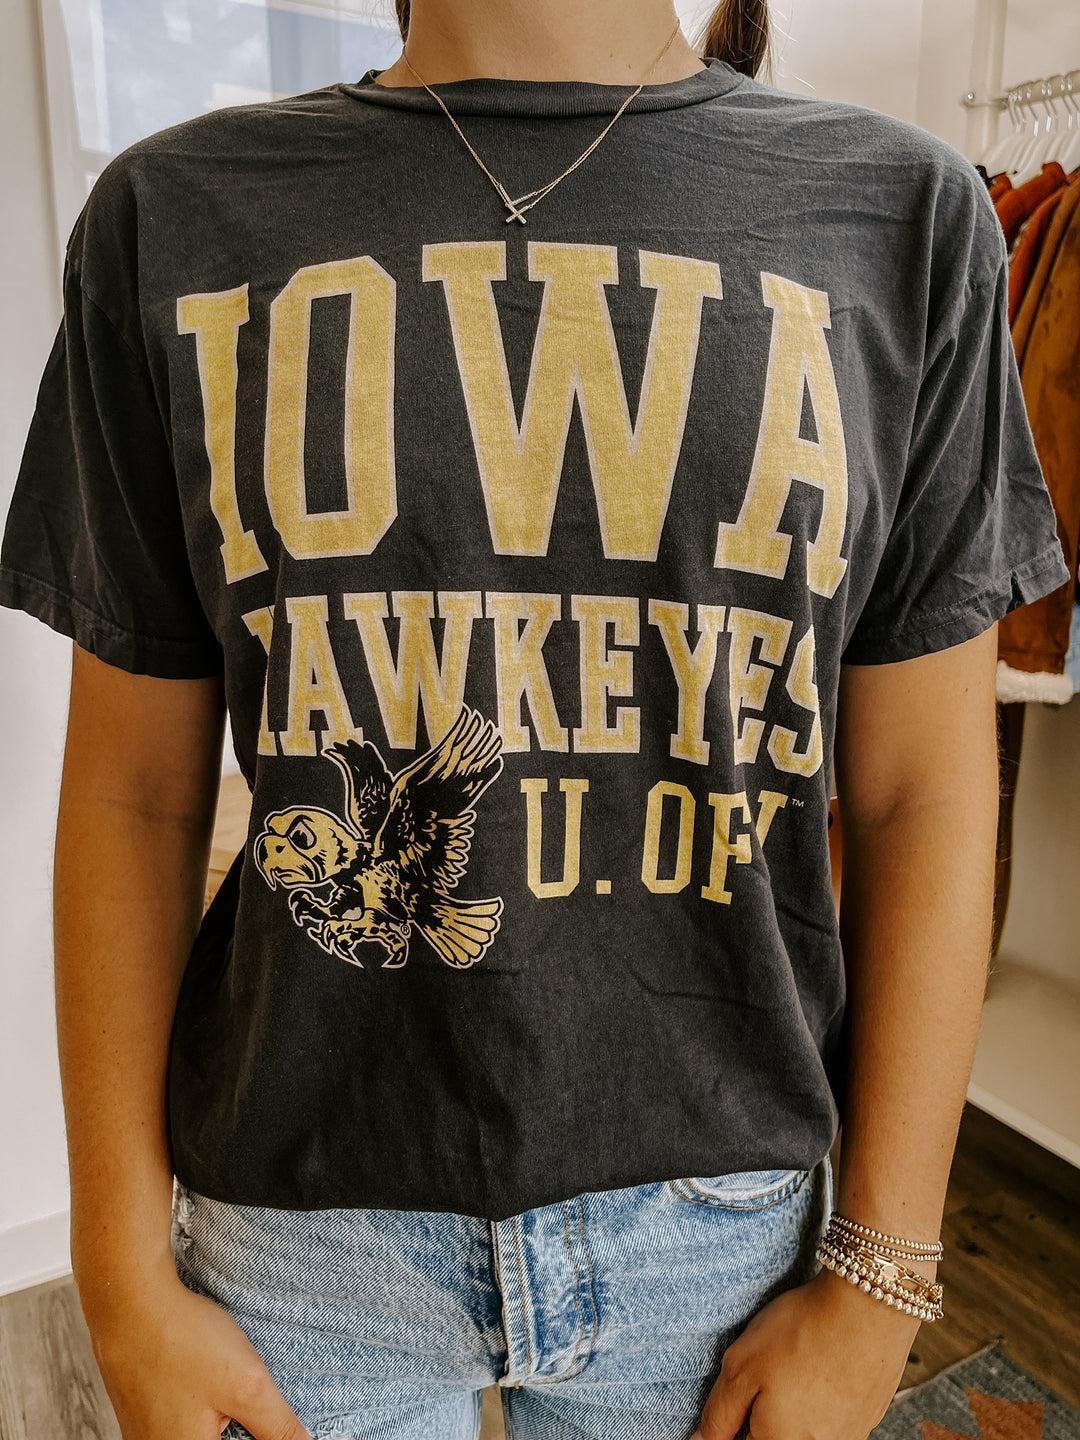 Retro Sport - University of Iowa Tee in Black